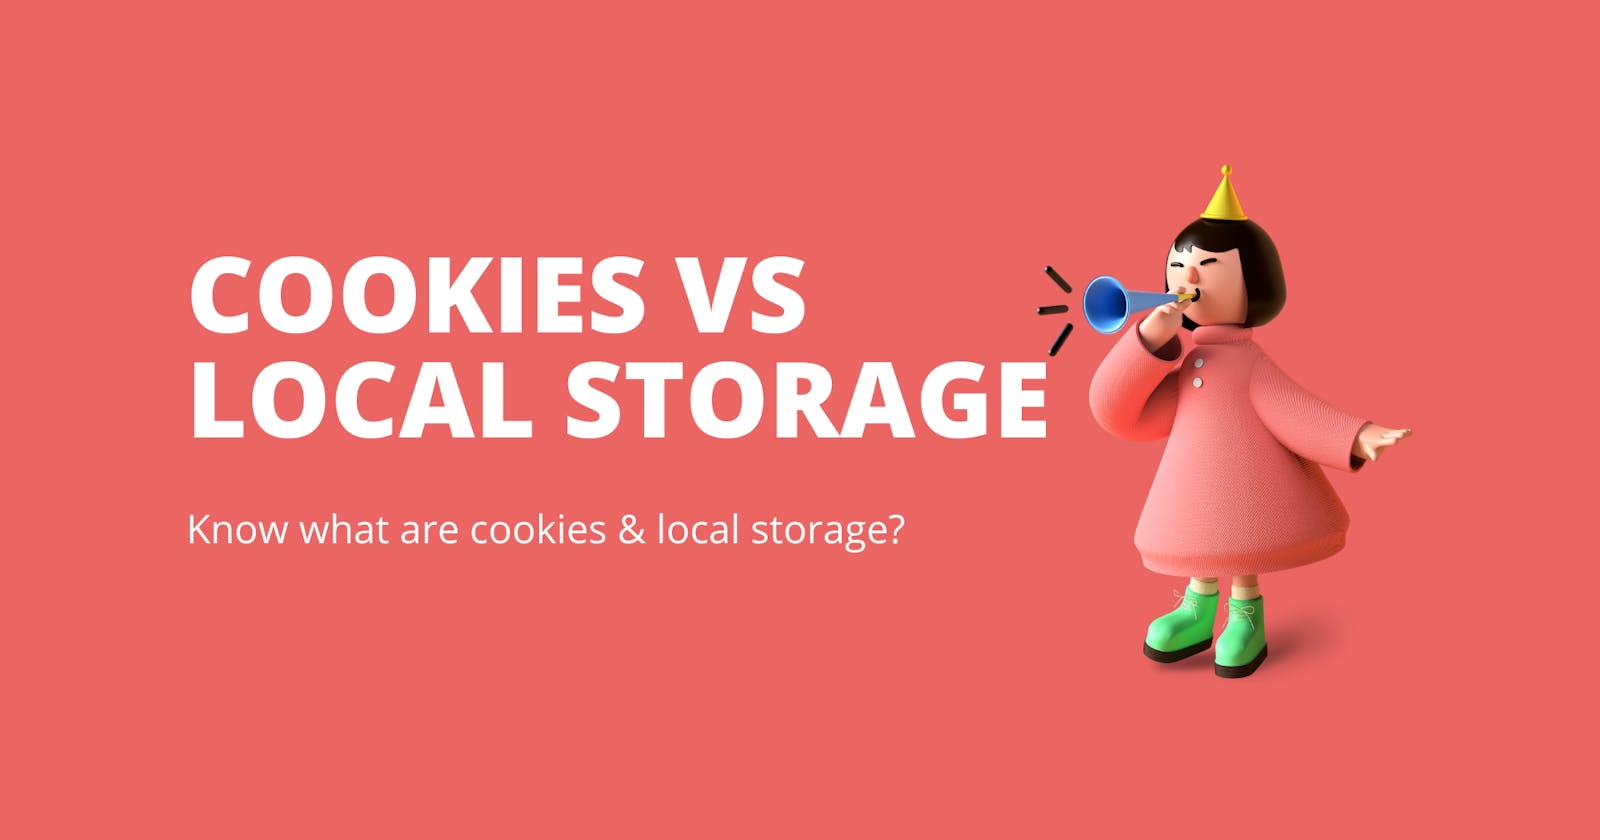 Cookies vs Local Storage